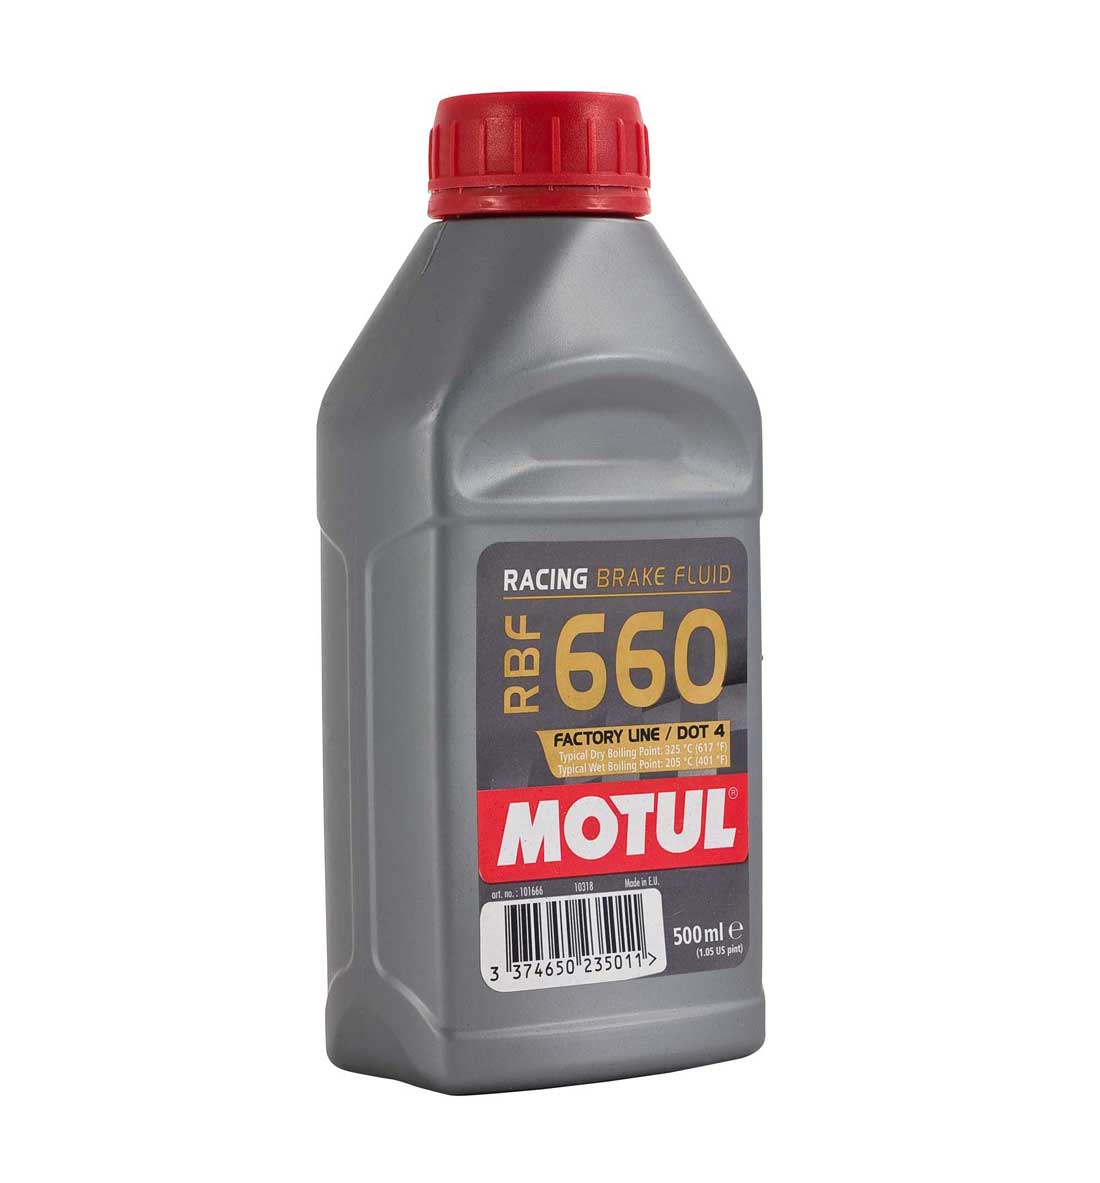 Motul RBF 660 Factory Fully Synthetic DOT 4 Racing Brake & Clutch Fluid - 500ml